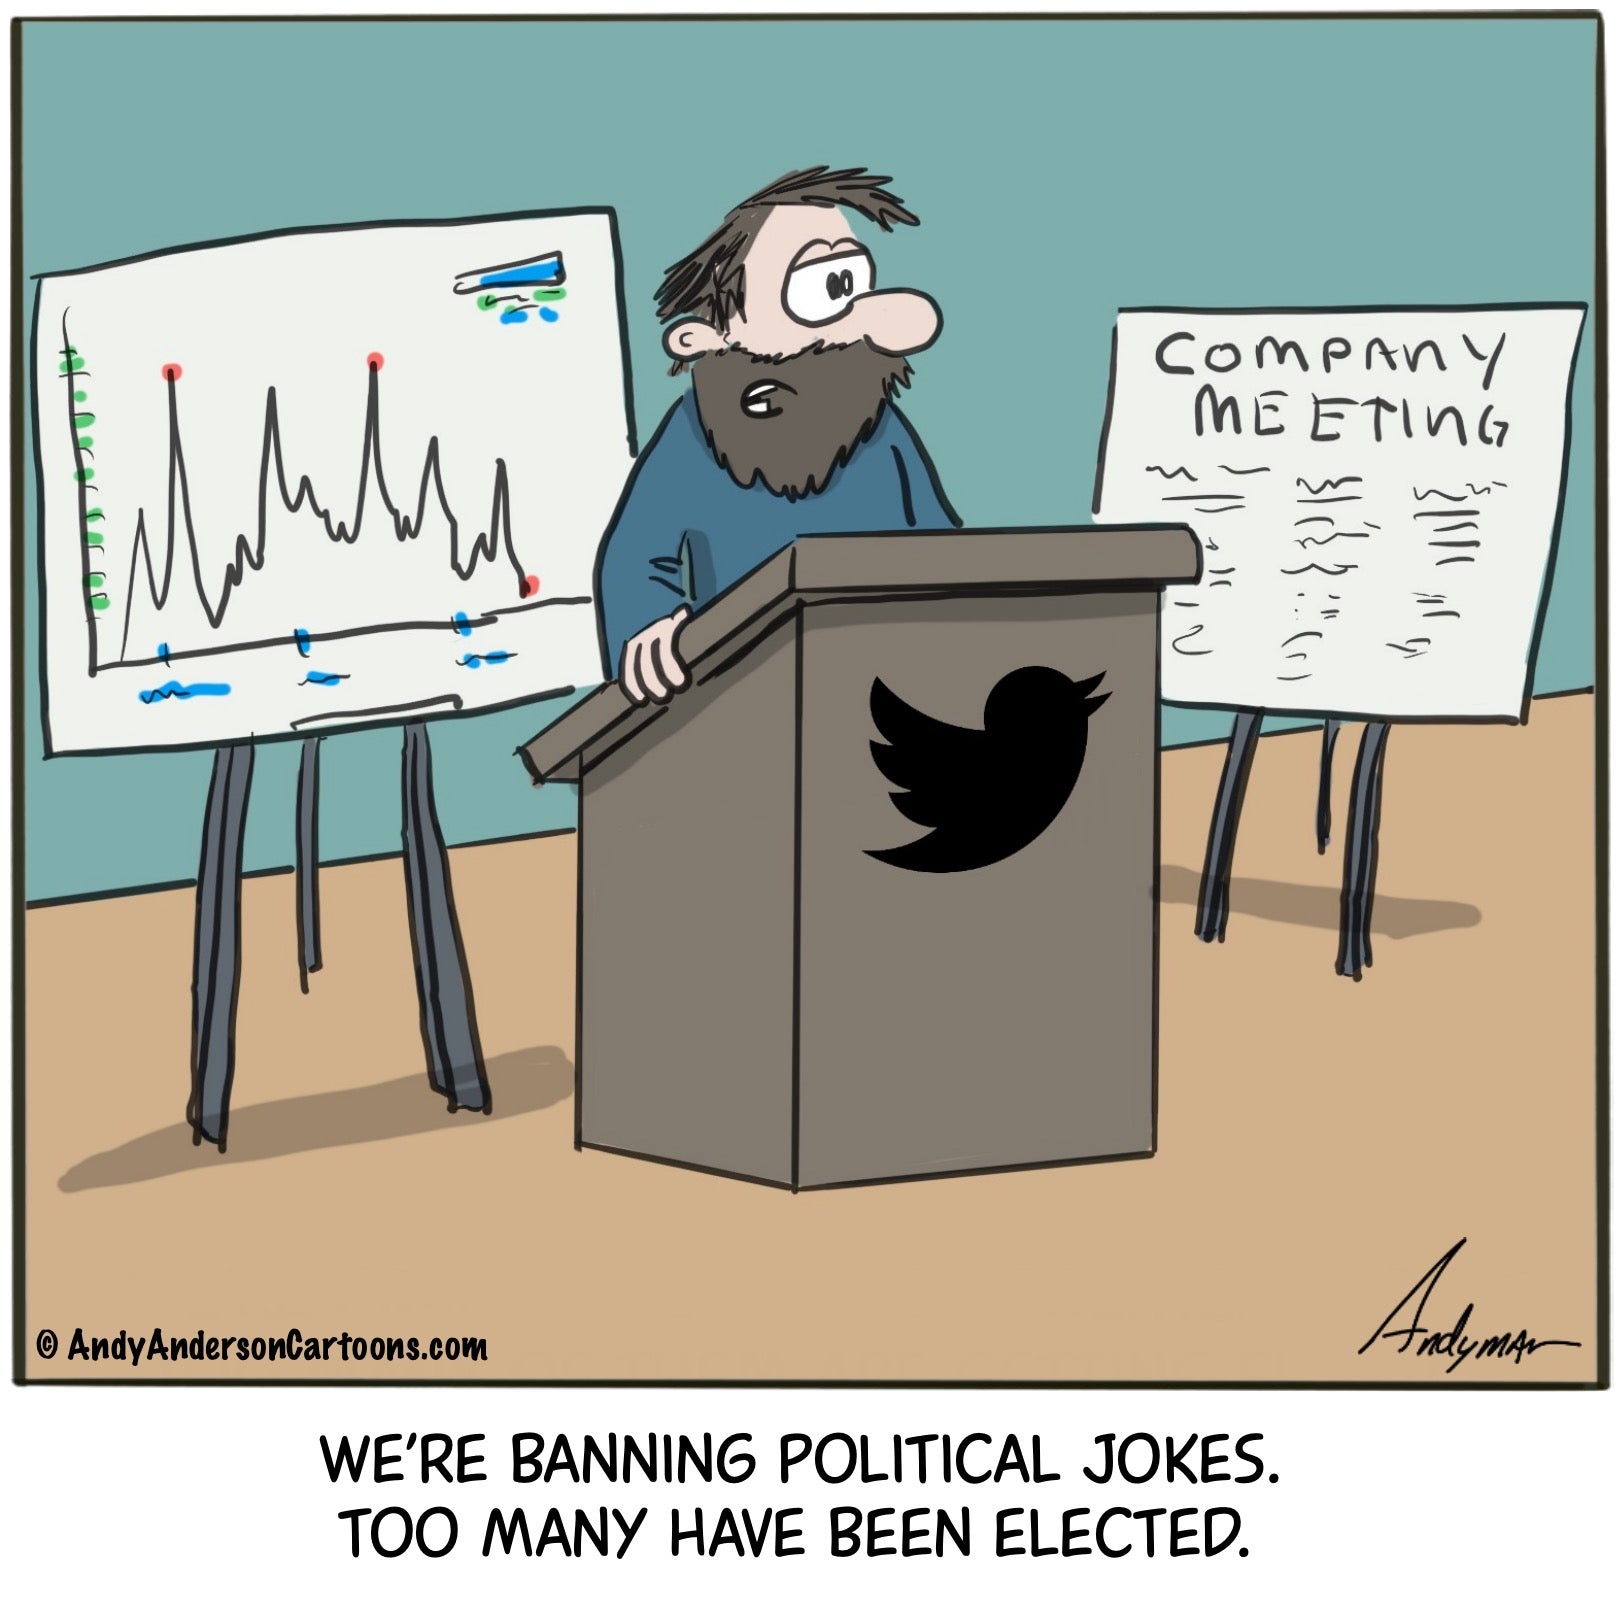 Cartoon about banning political jokes on Twitter